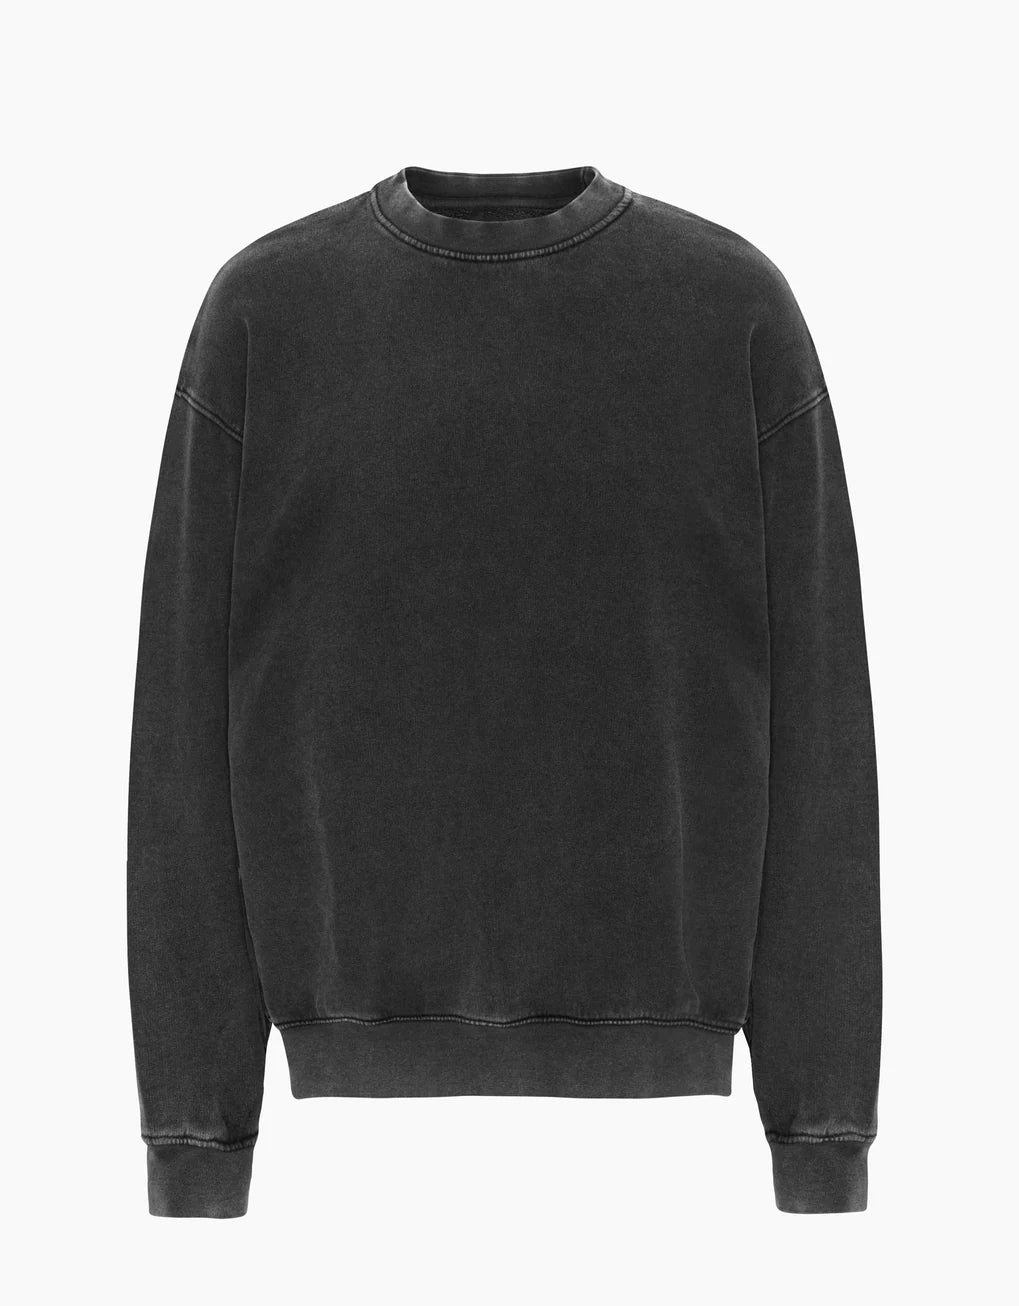 Oversized crewneck sweater in faded black